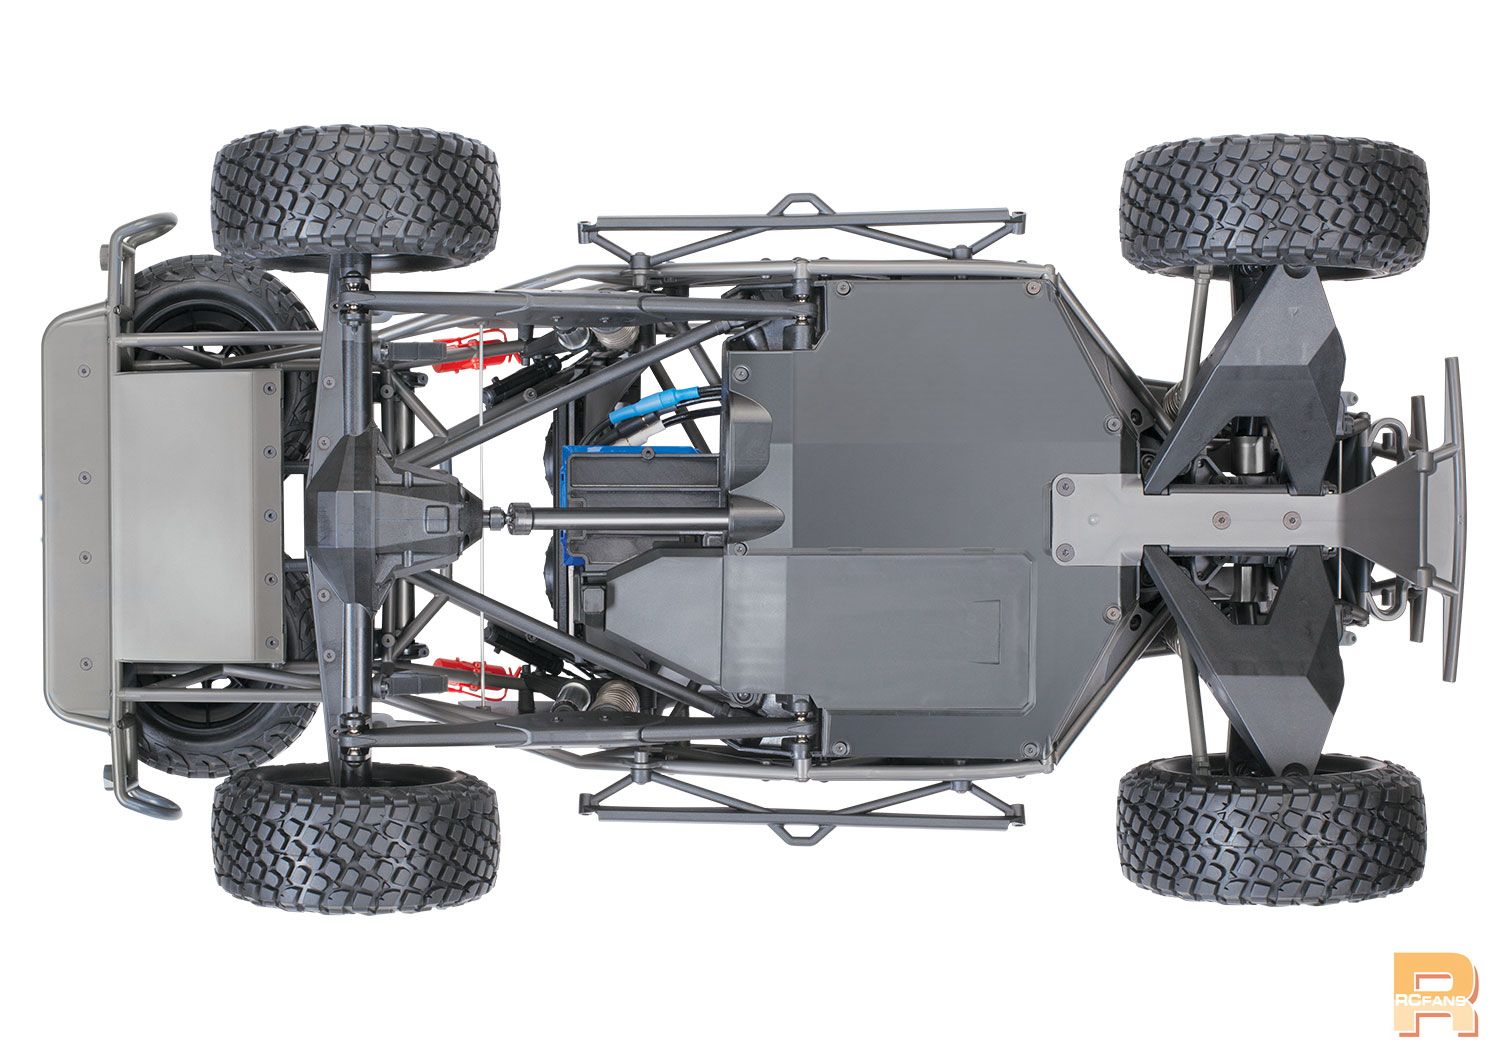 chassis-bottom-plates-on.jpg